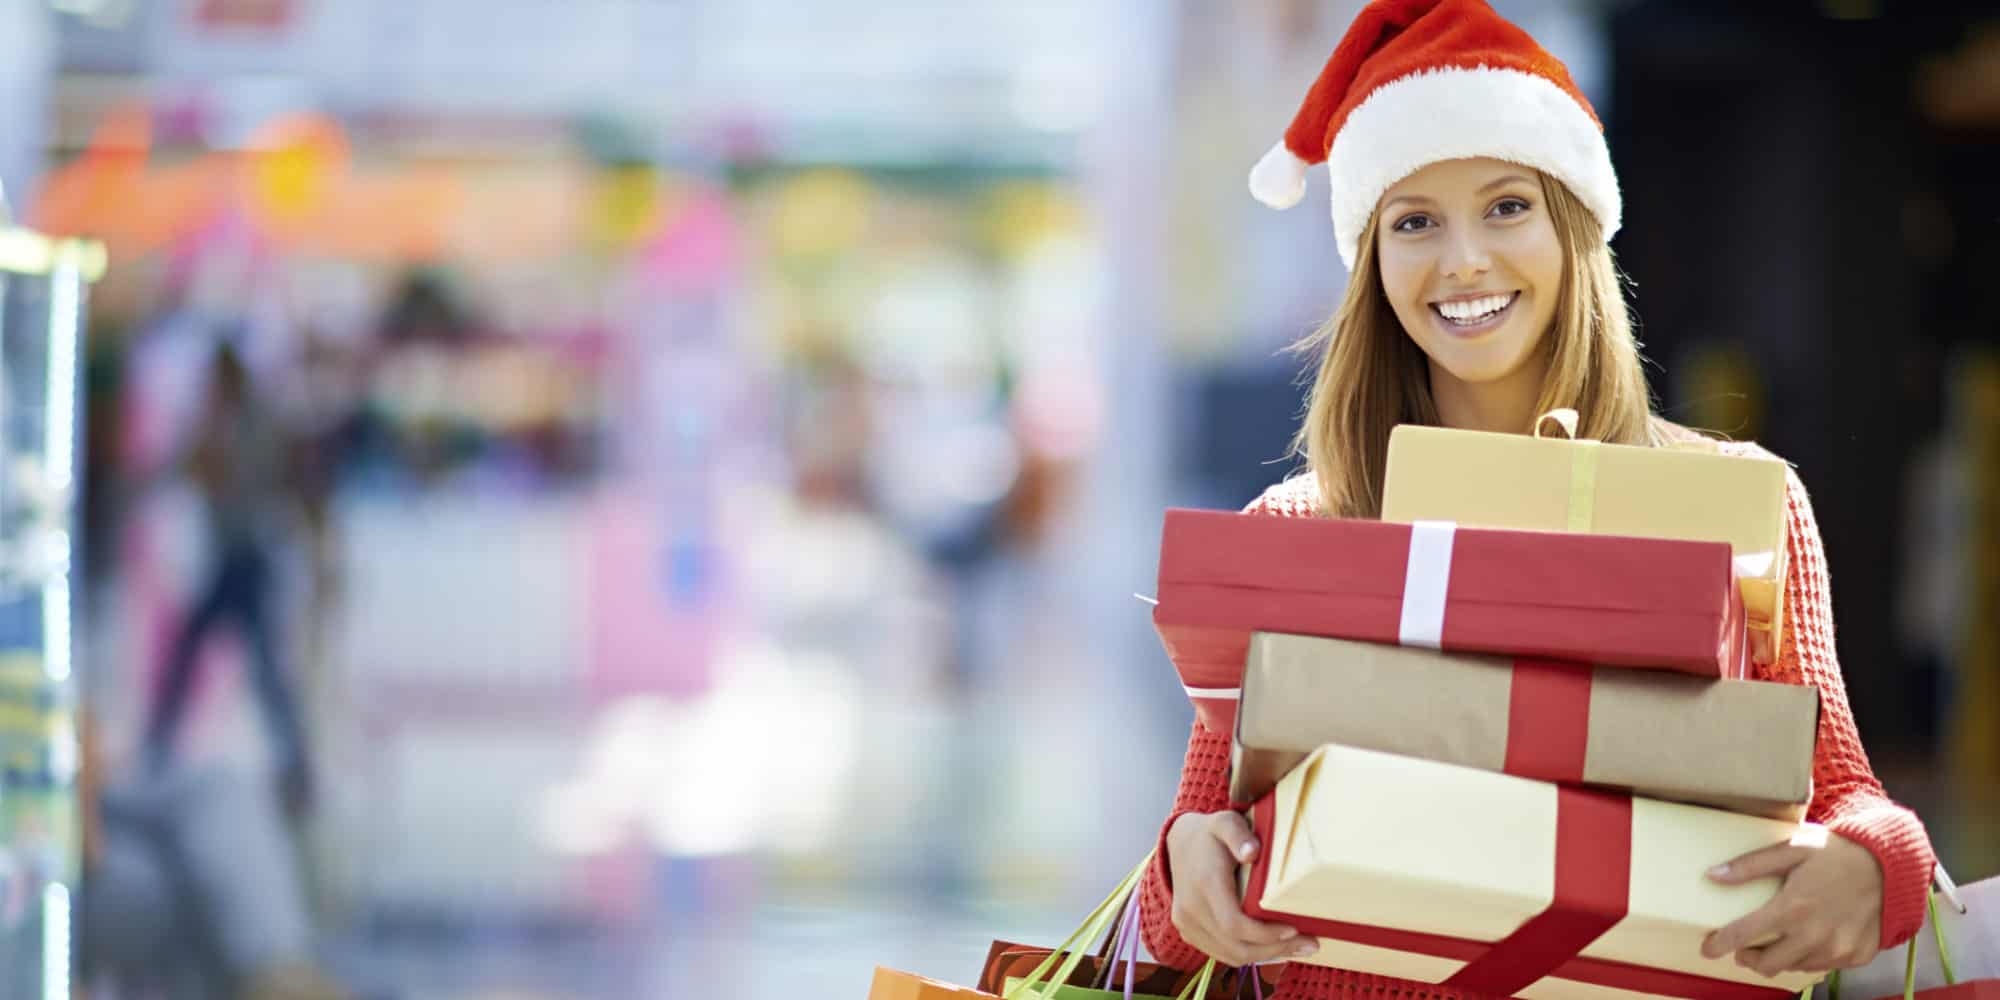 Shoppers need gifting ideas for Christmas season